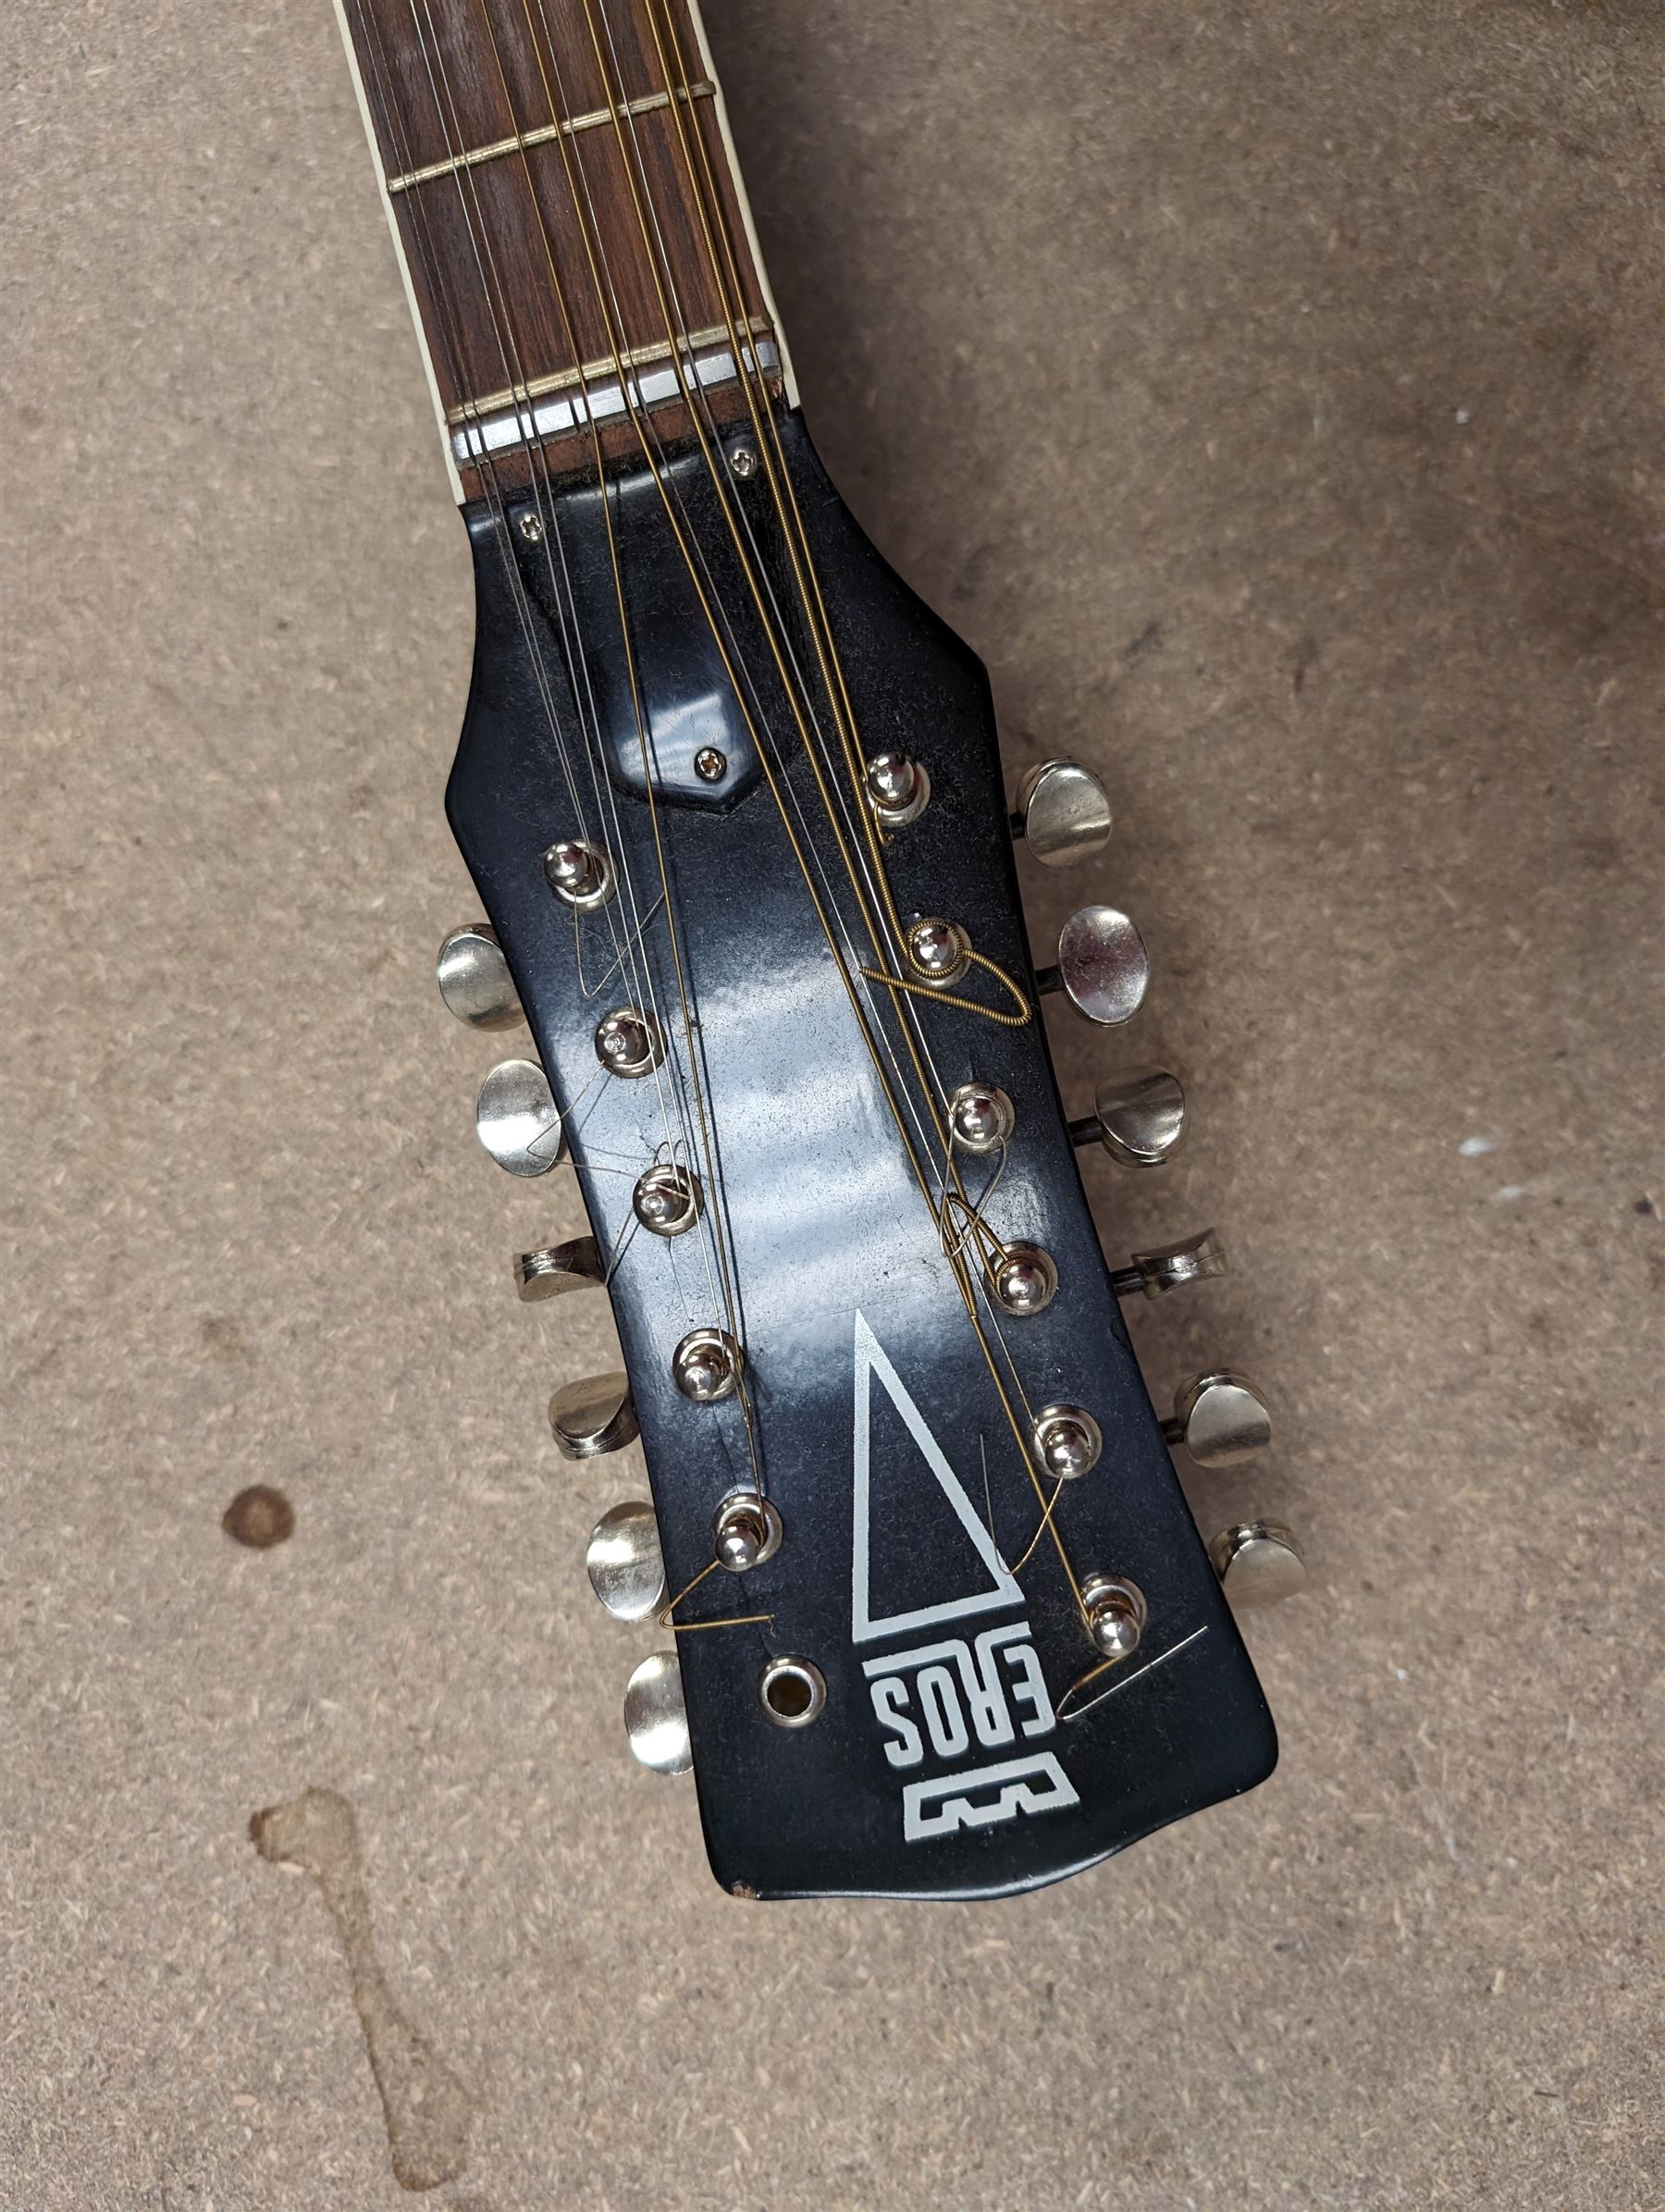 E-Ros model 612 twelve string acoustic guitar - Image 4 of 4